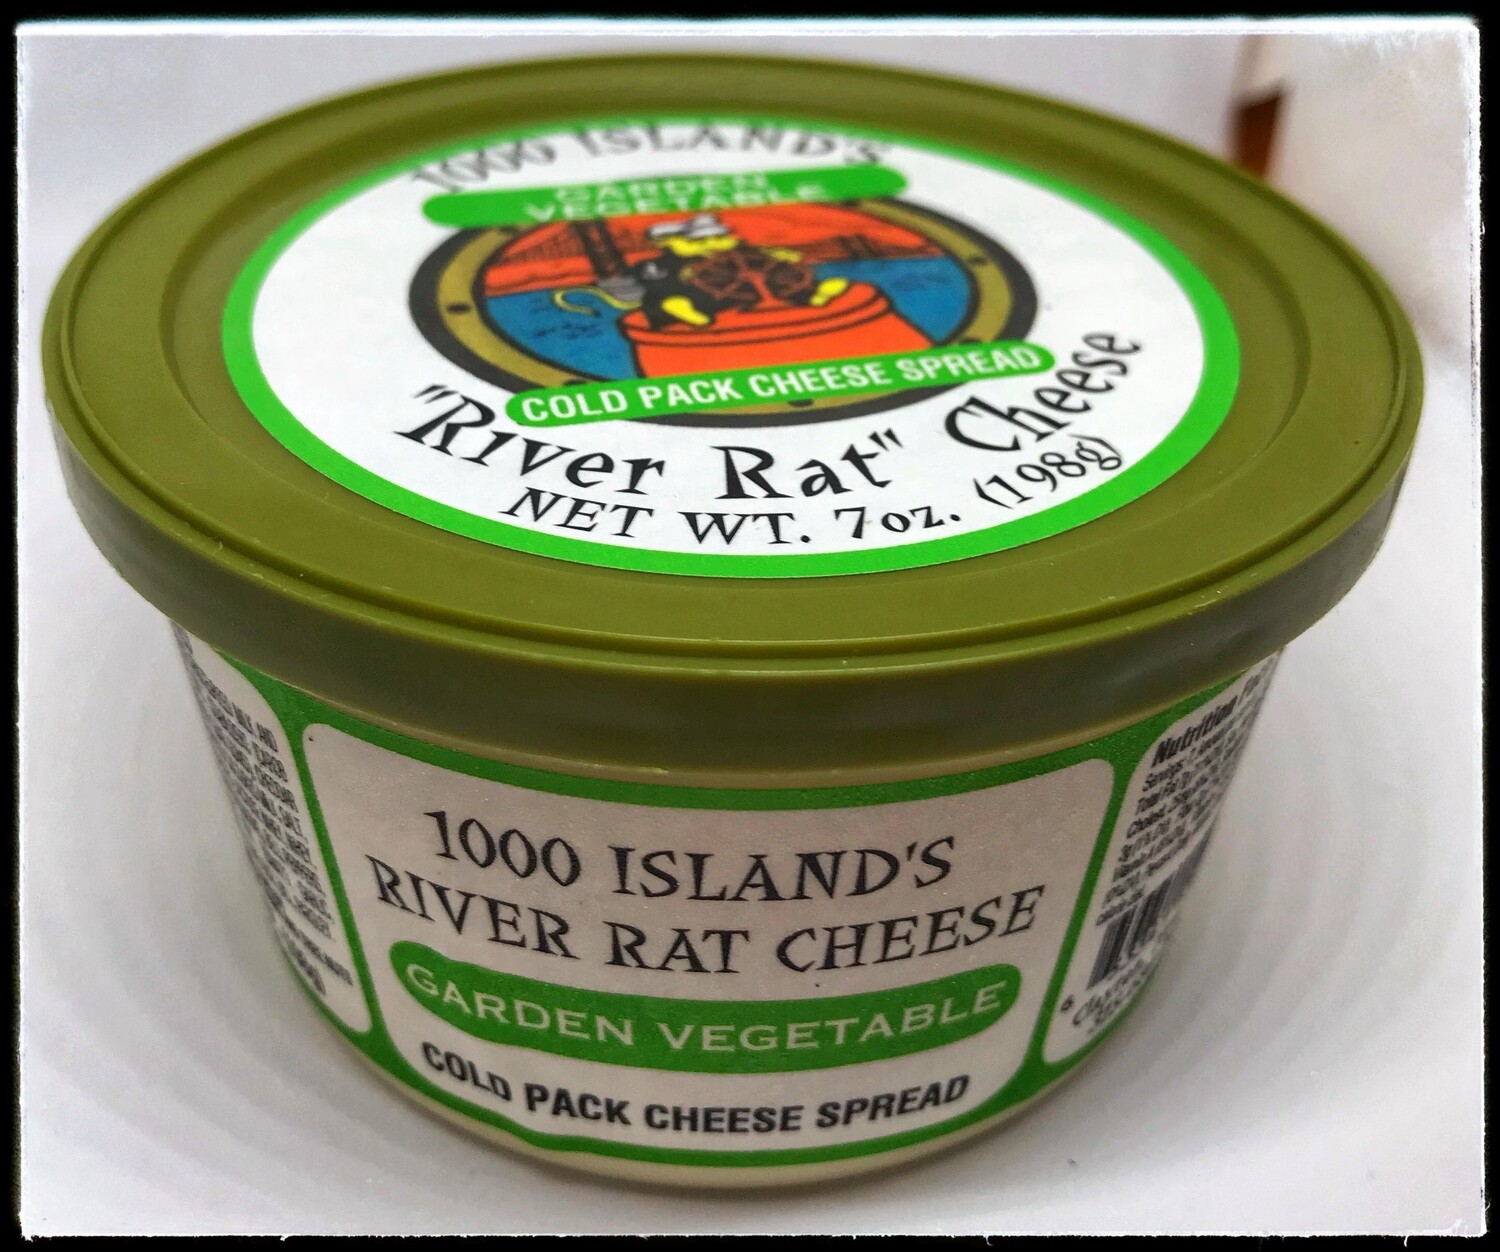 River Rat Garden Vegetable Cheese Spread